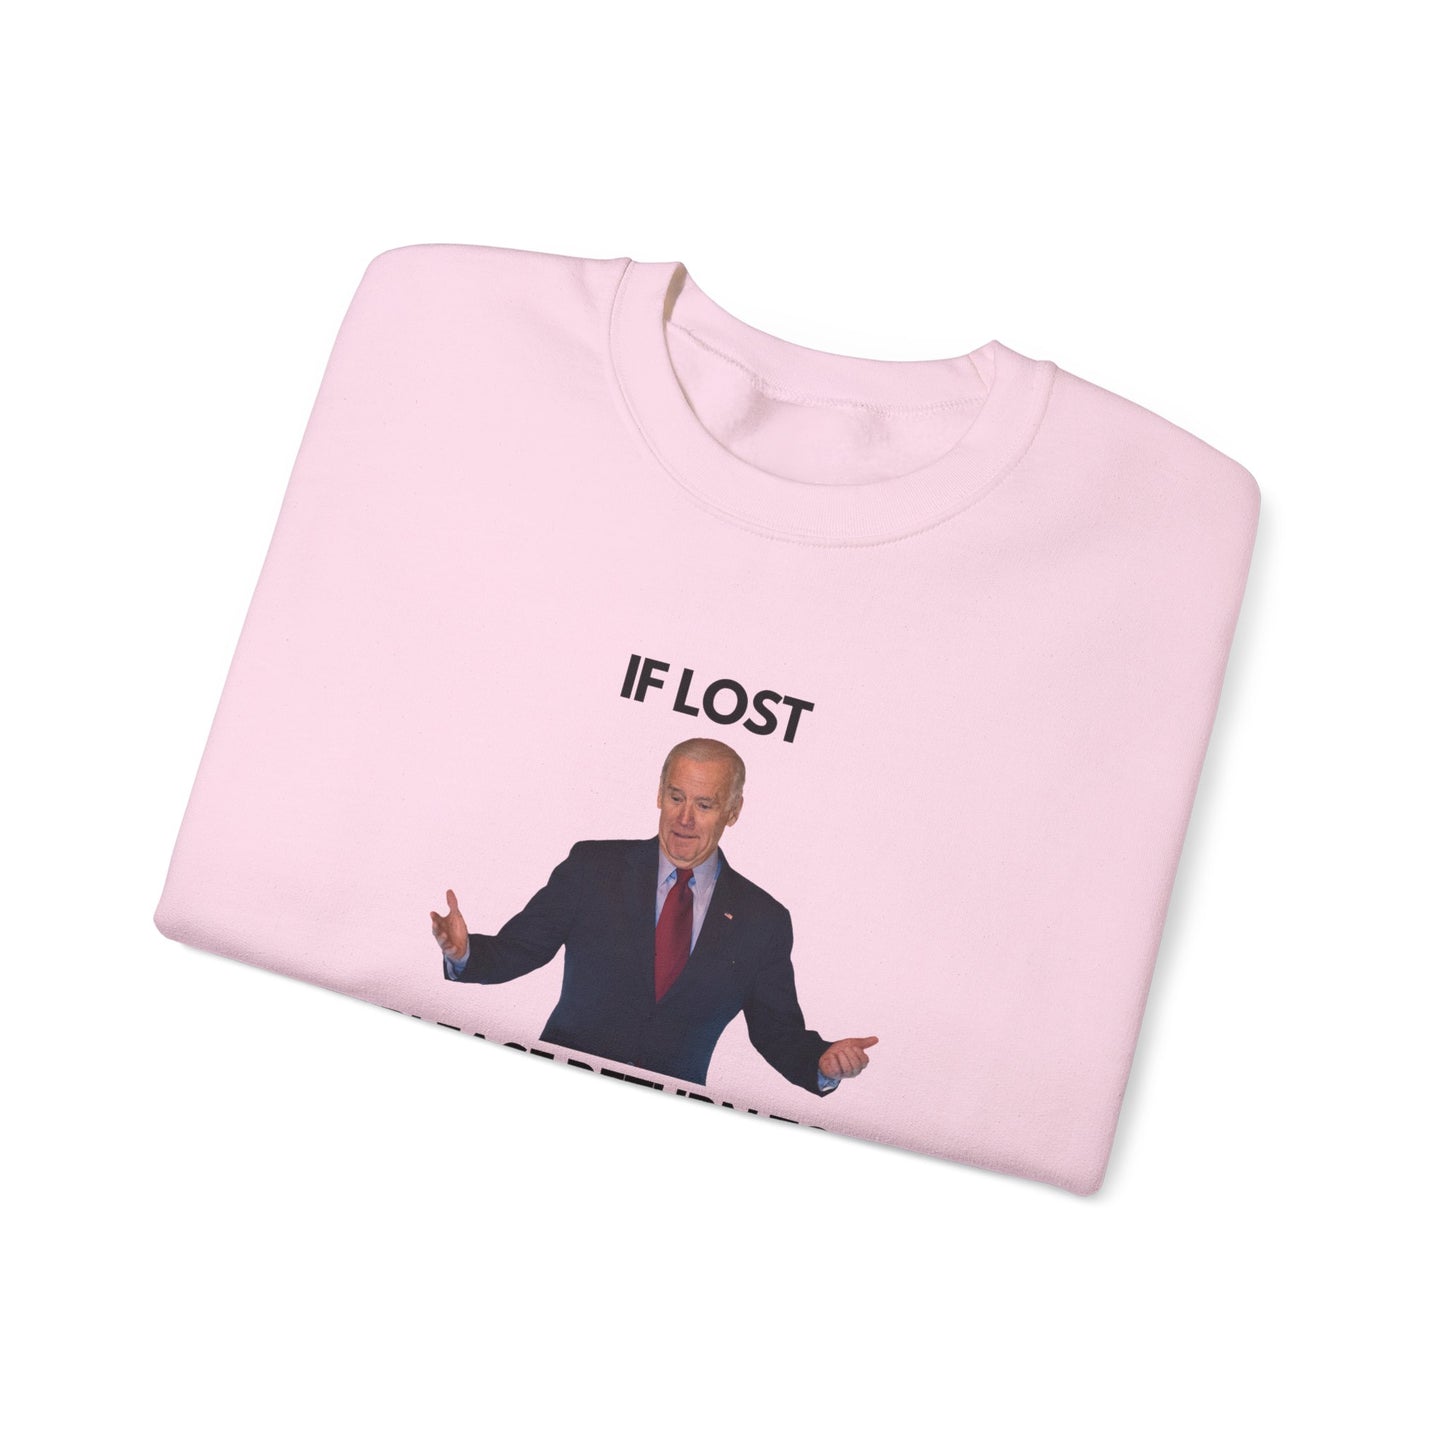 If Lost... Return To White House Crewneck Sweatshirt